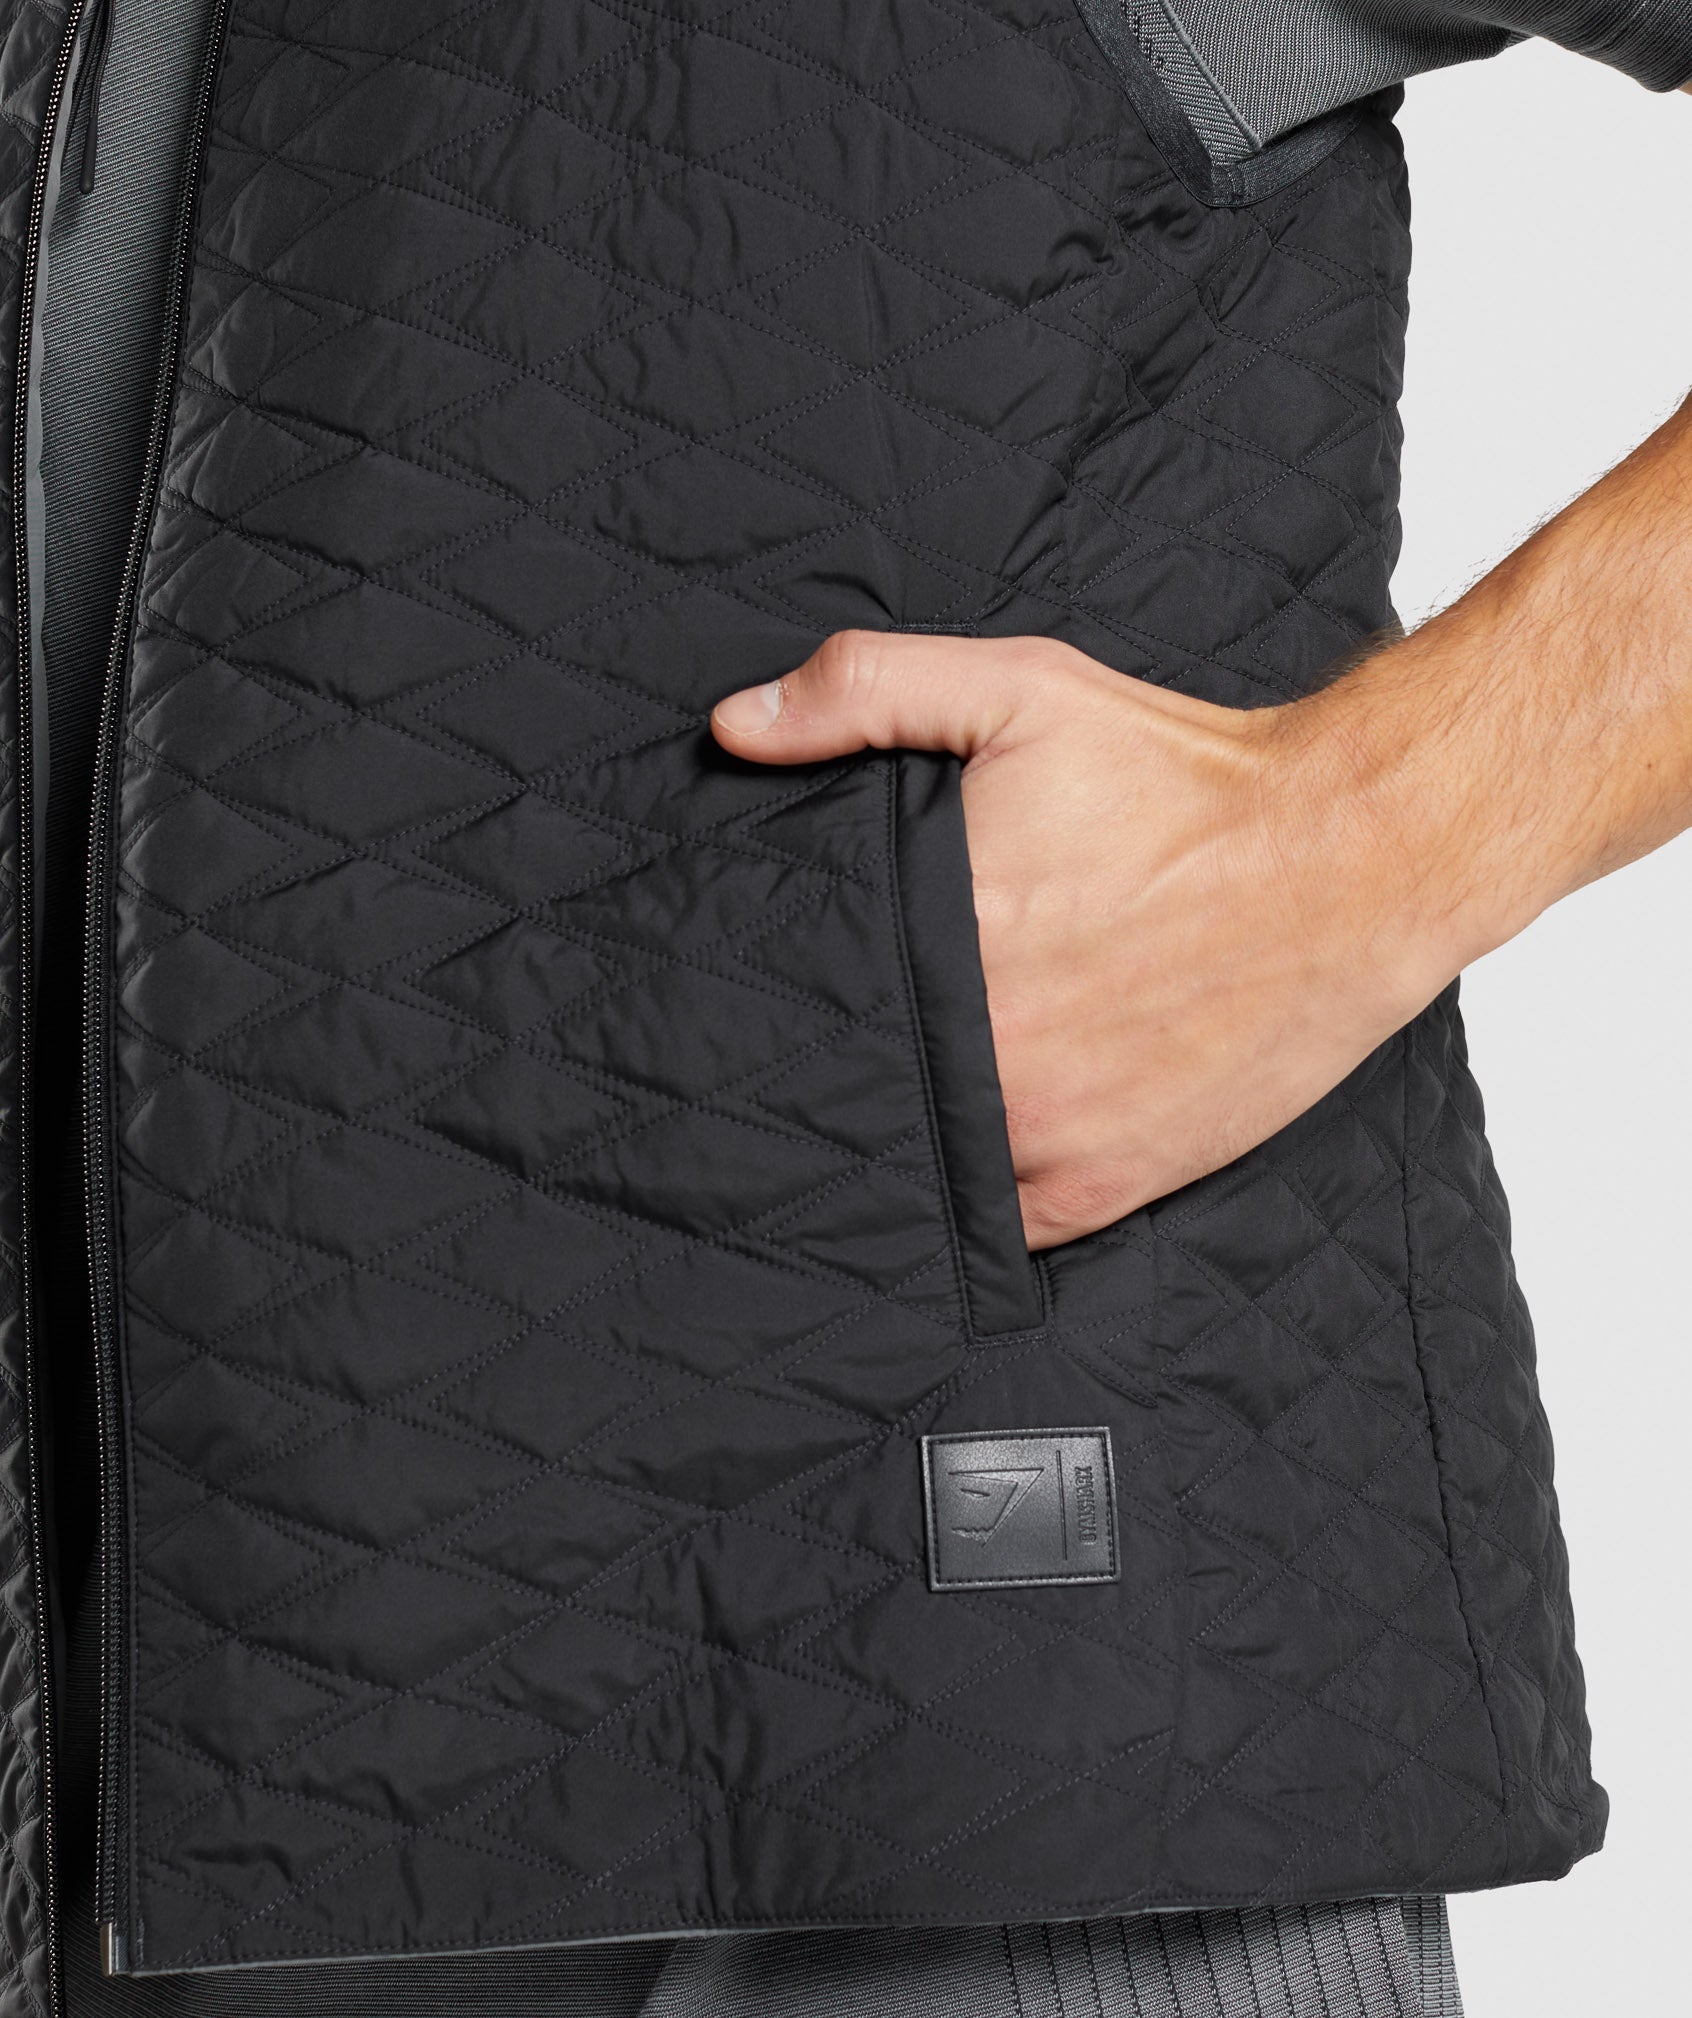 Retake Reversible Vest in Charcoal/Black